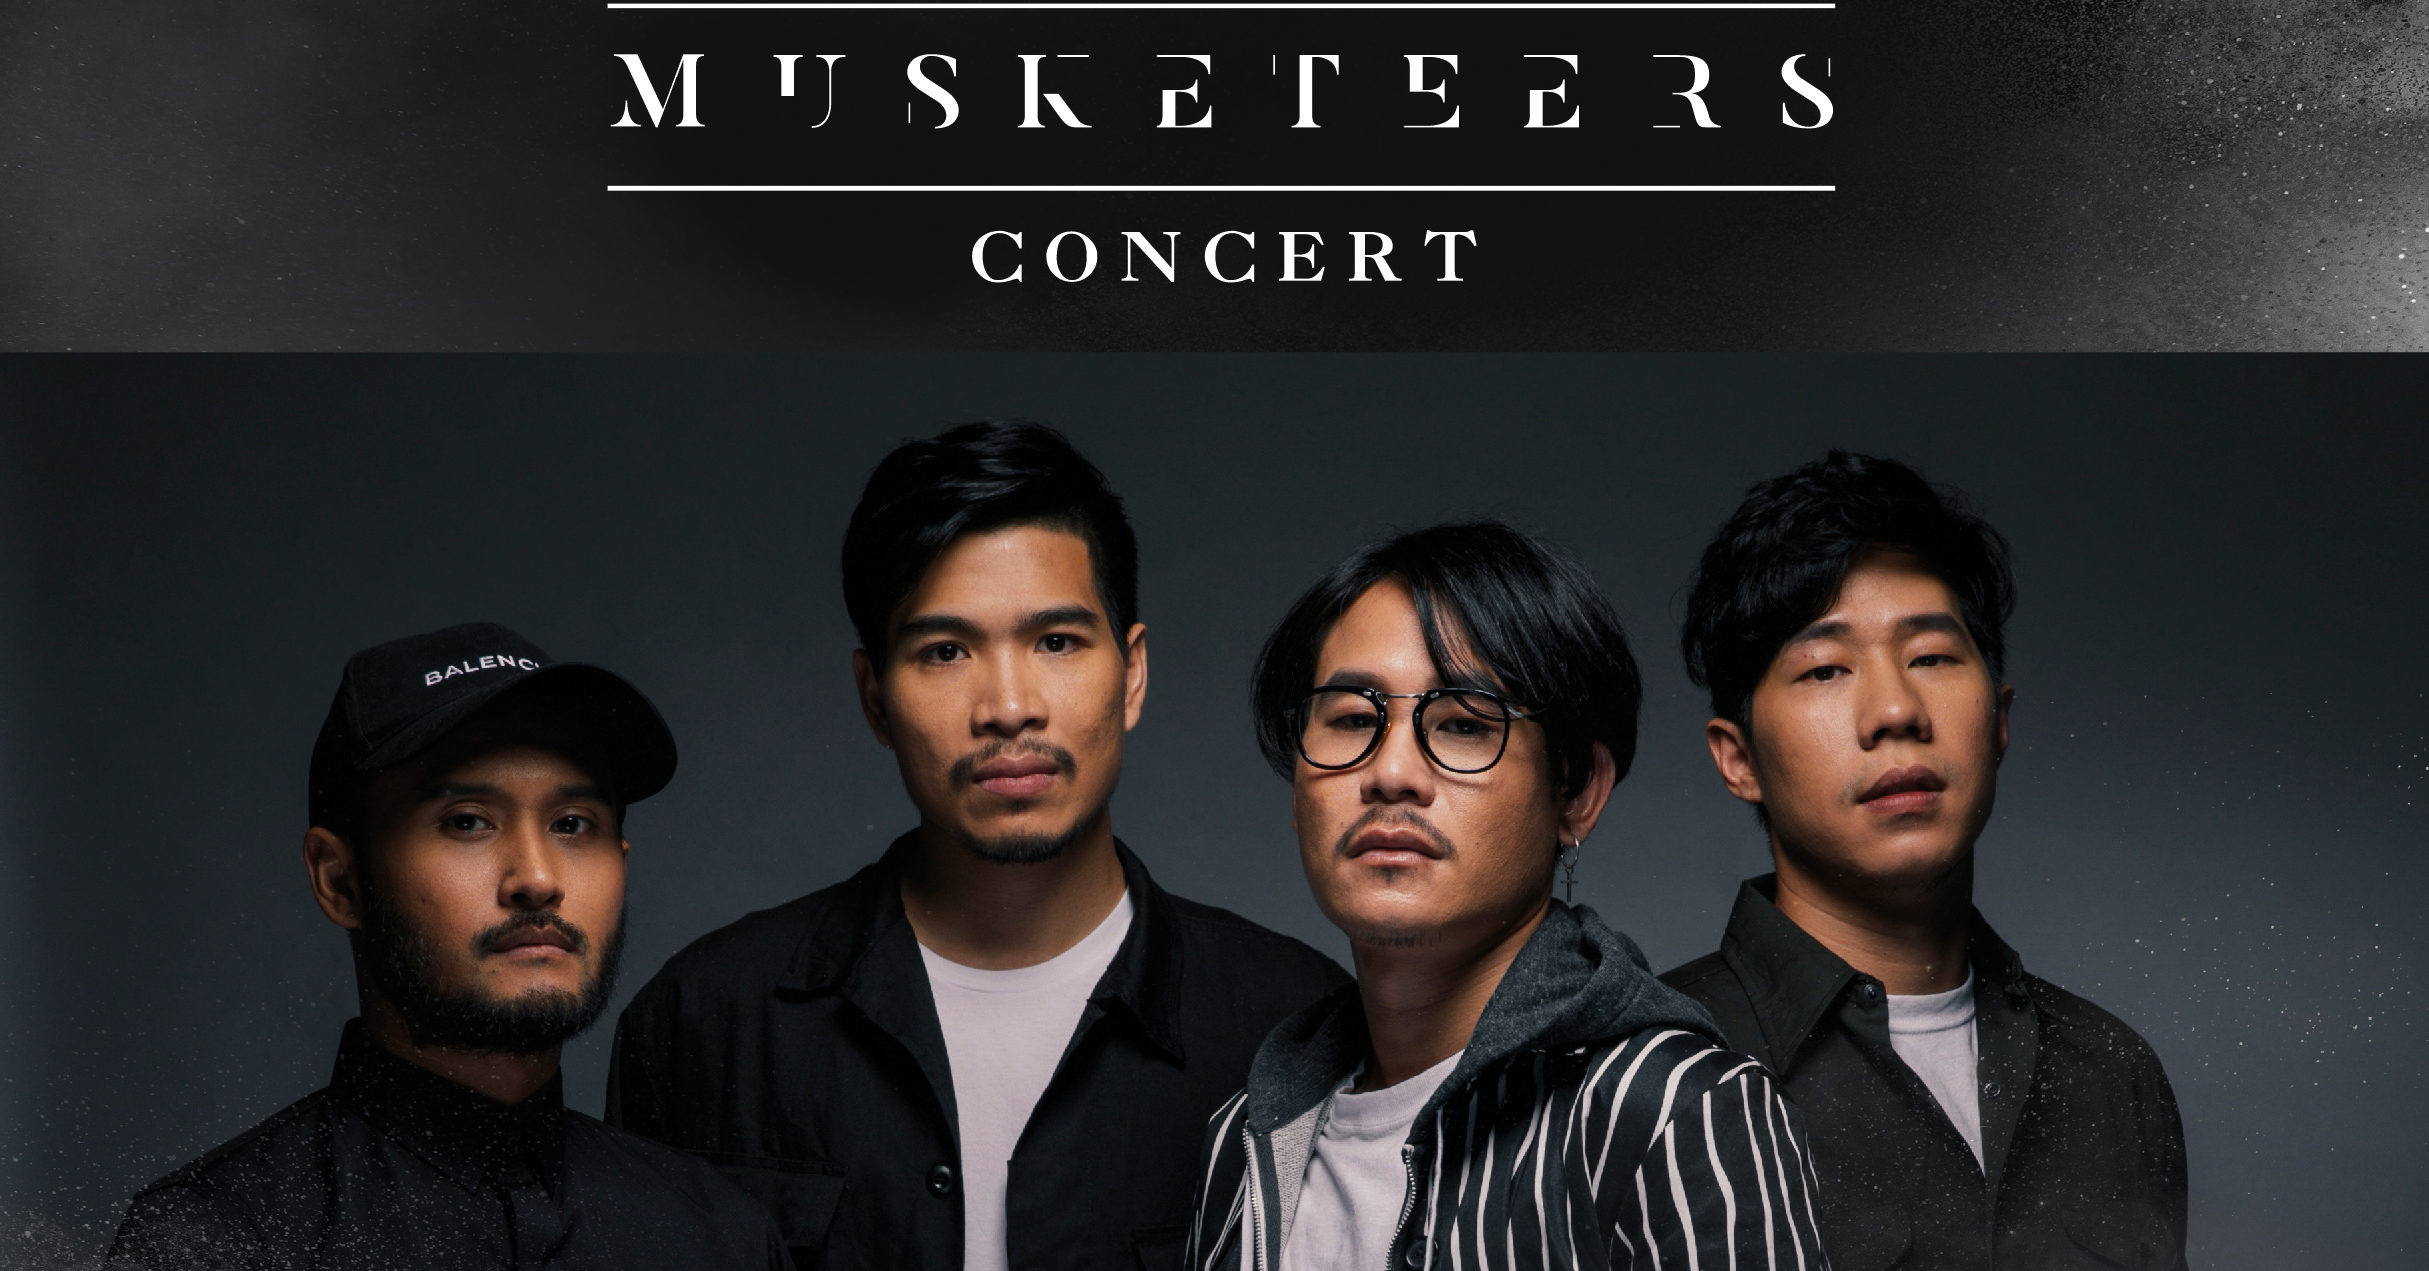 Musketeers ส่งเพลงใหม่ ปล่อยไว้อย่างนั้น ต้อนรับอัลบัมเต็มชุดที่ 3 พร้อมคอนเสิร์ตใหญ่ 10 Years Musketeers Concert